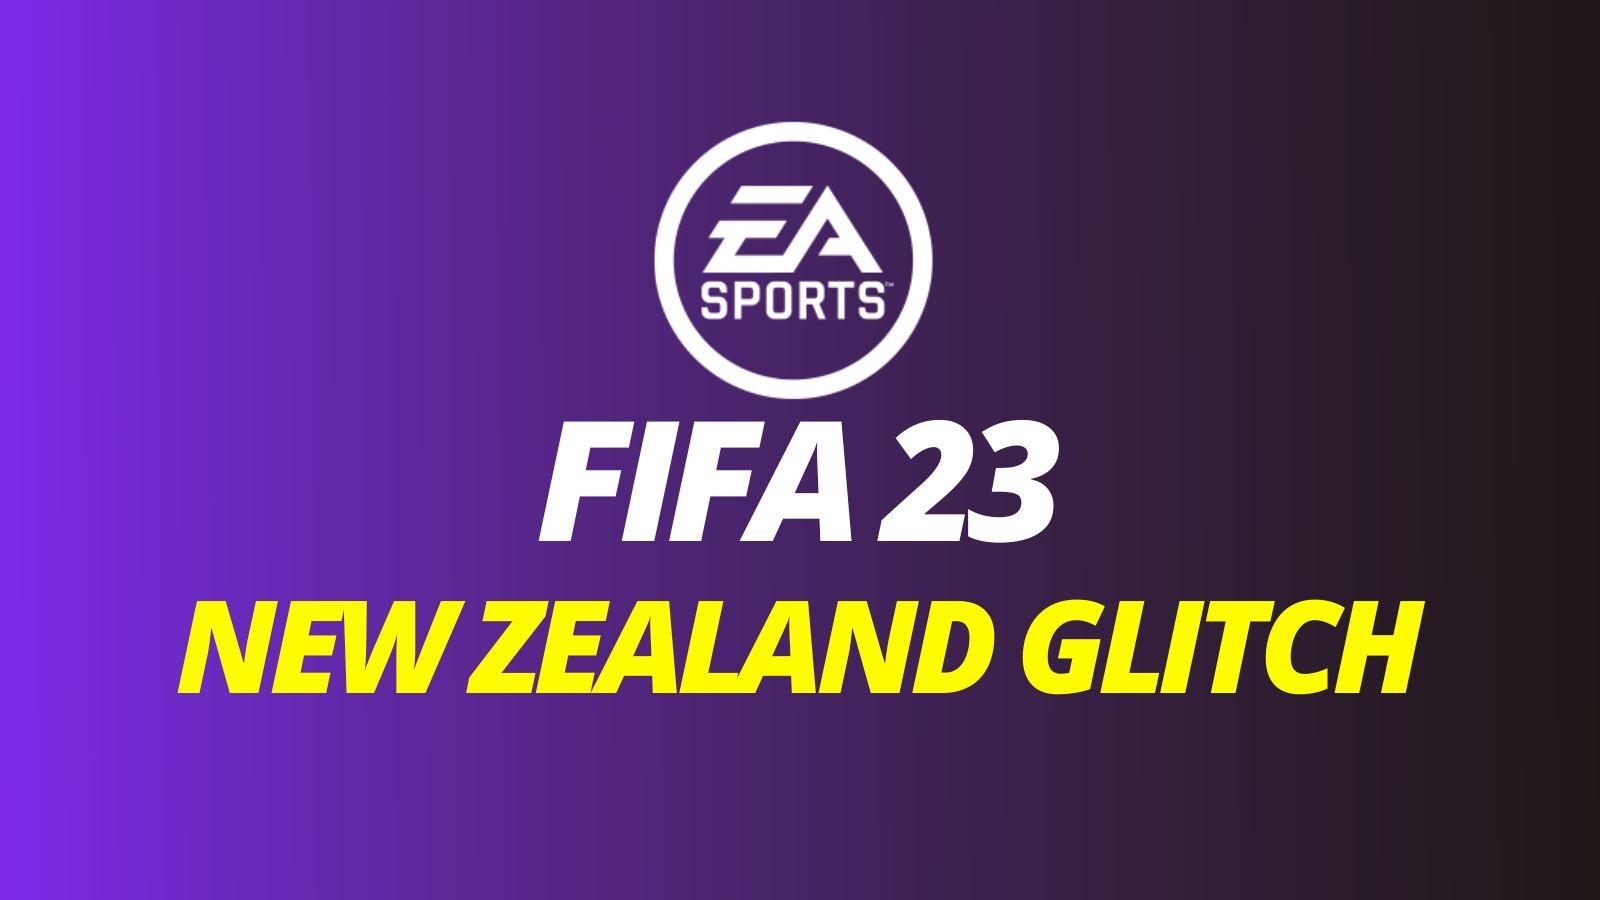 New Zealand glitch FIFA 23